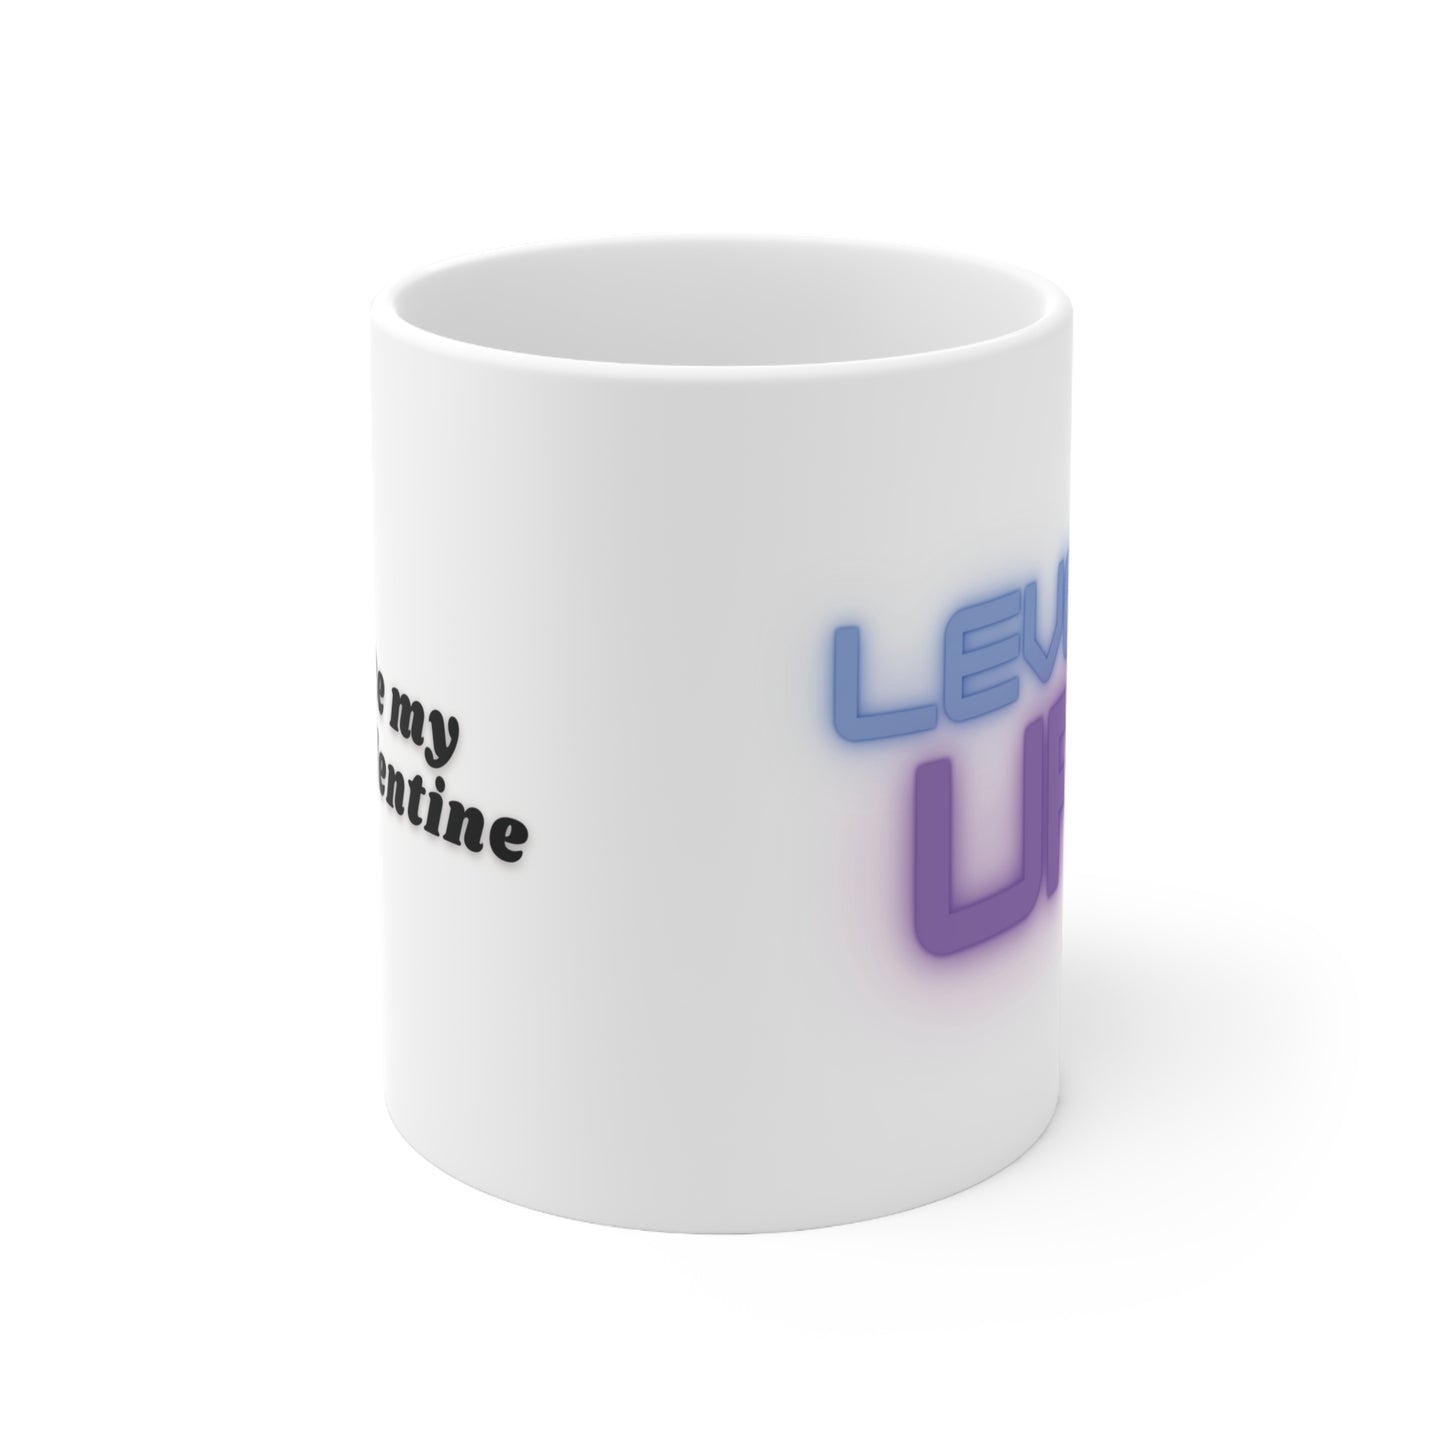 Valentine's day - Level Up Valentine - Ceramic Mug 11oz